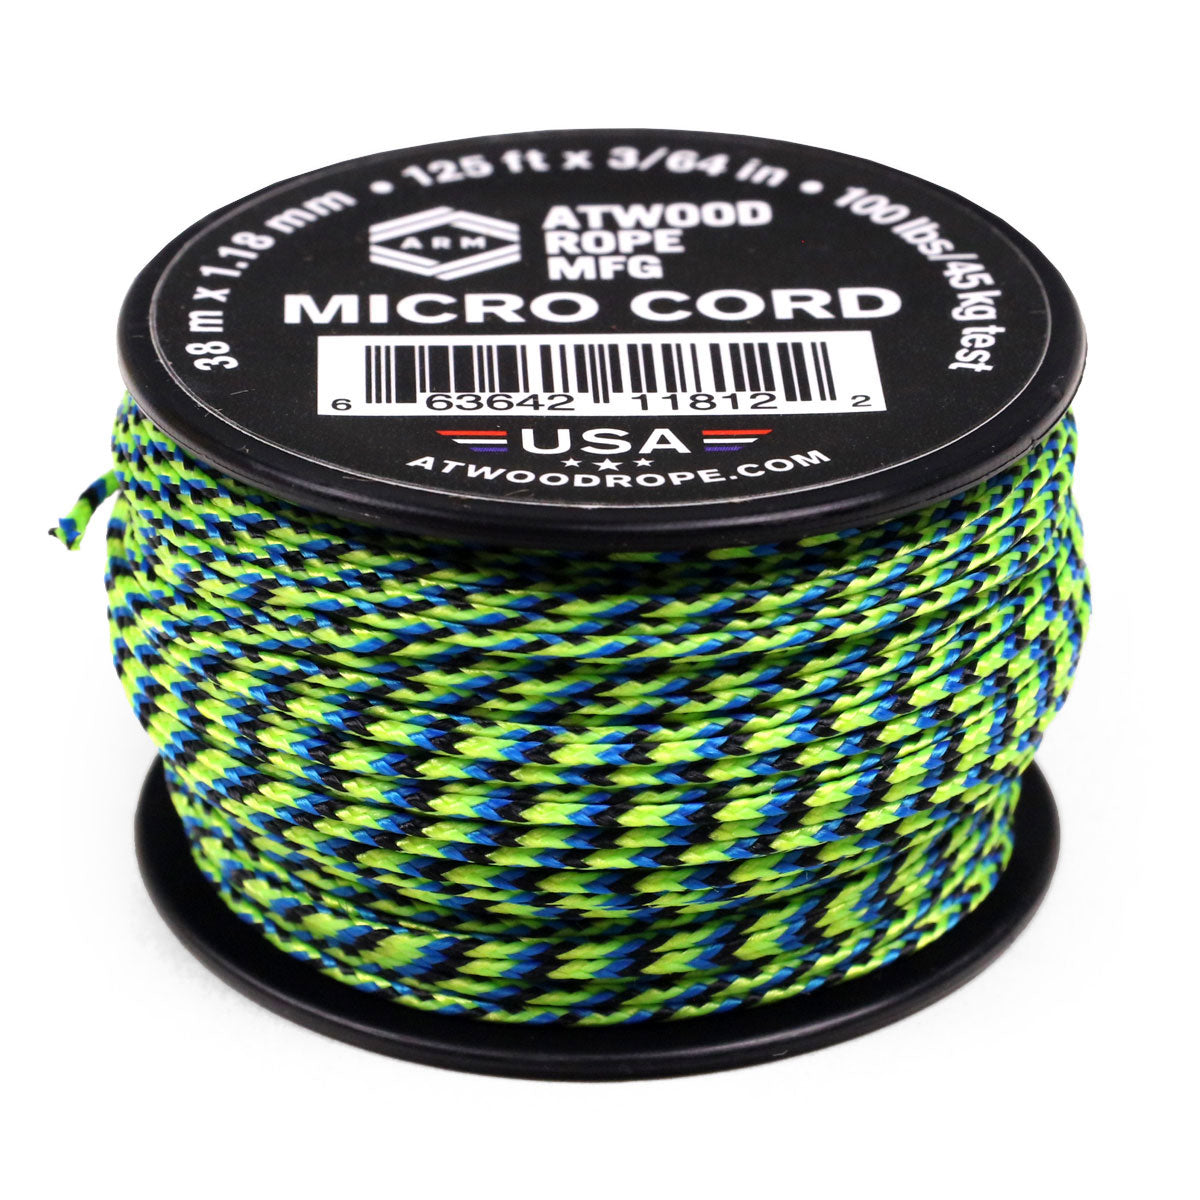 1.18mm Micro Cord - Aquatica – Atwood Rope MFG